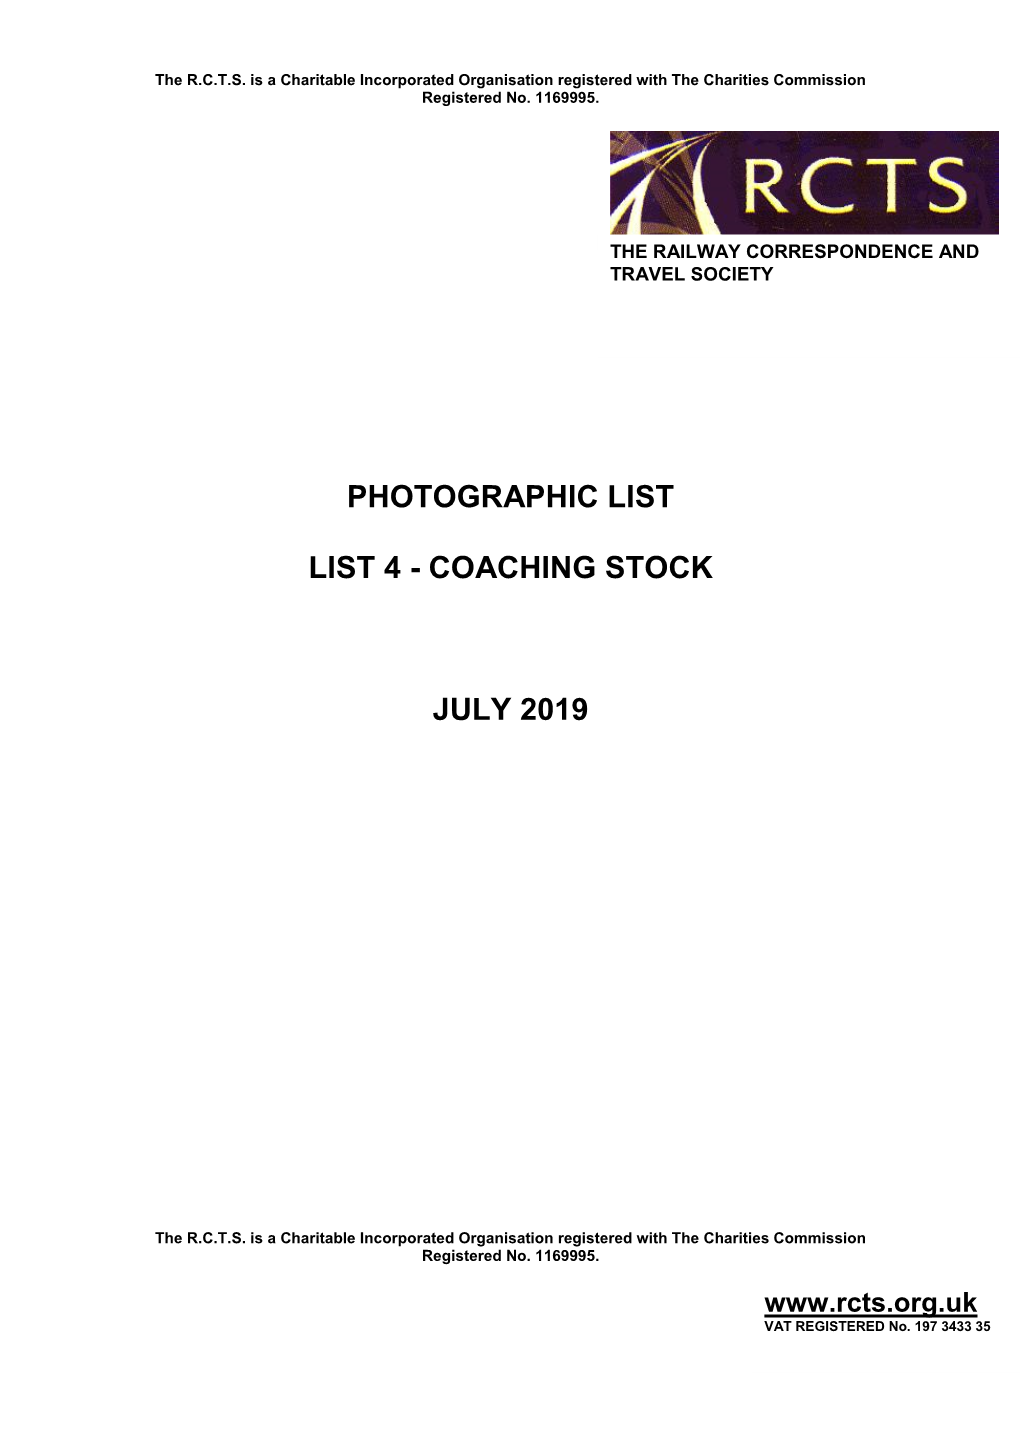 Coaching Stock July 2019